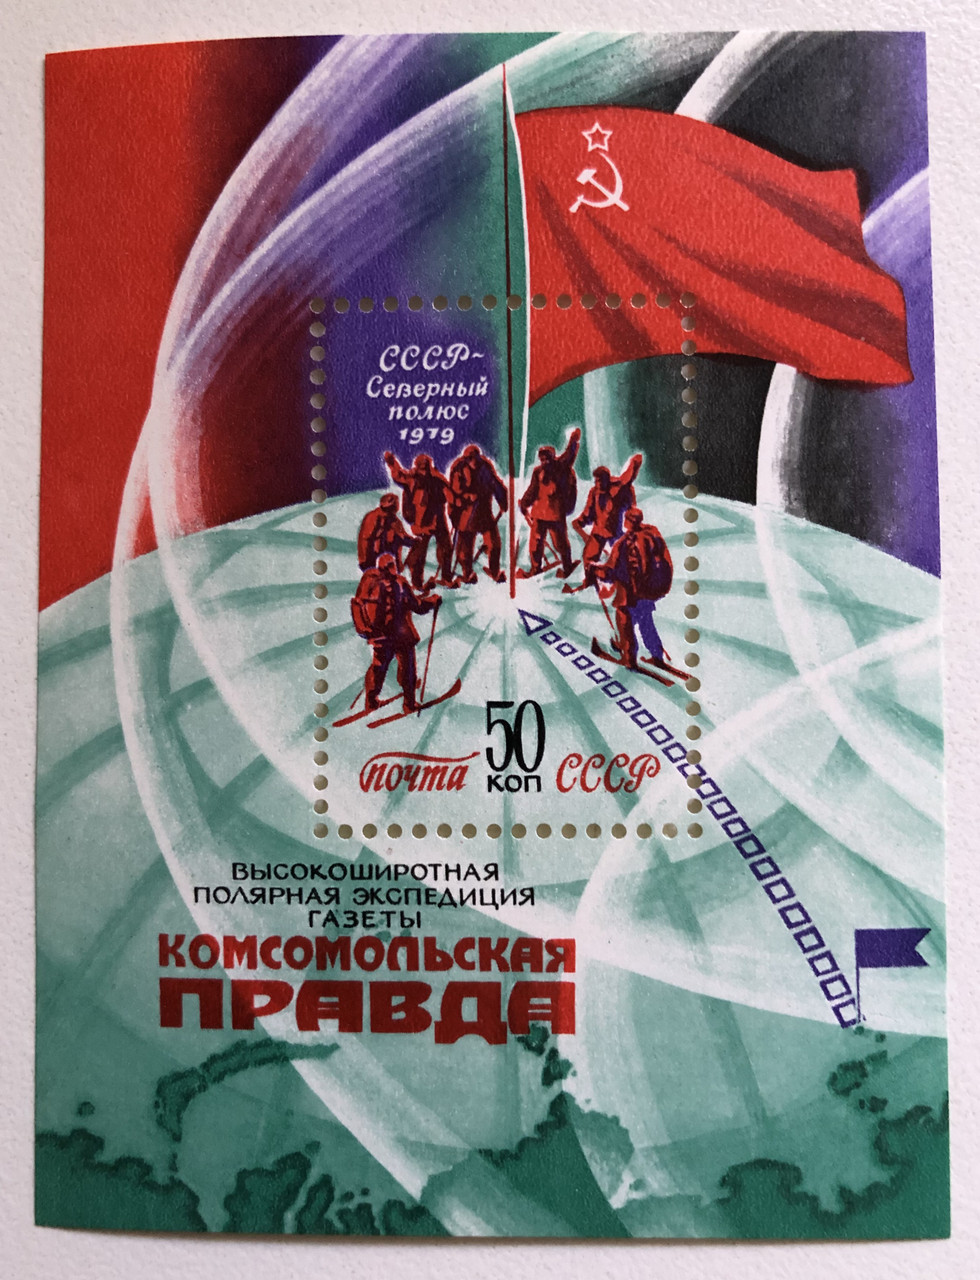 _USSR_POST_-_1979_USSR-North_Pole_1979___19846.1697020221.1280.1280.JPG (980×1280)